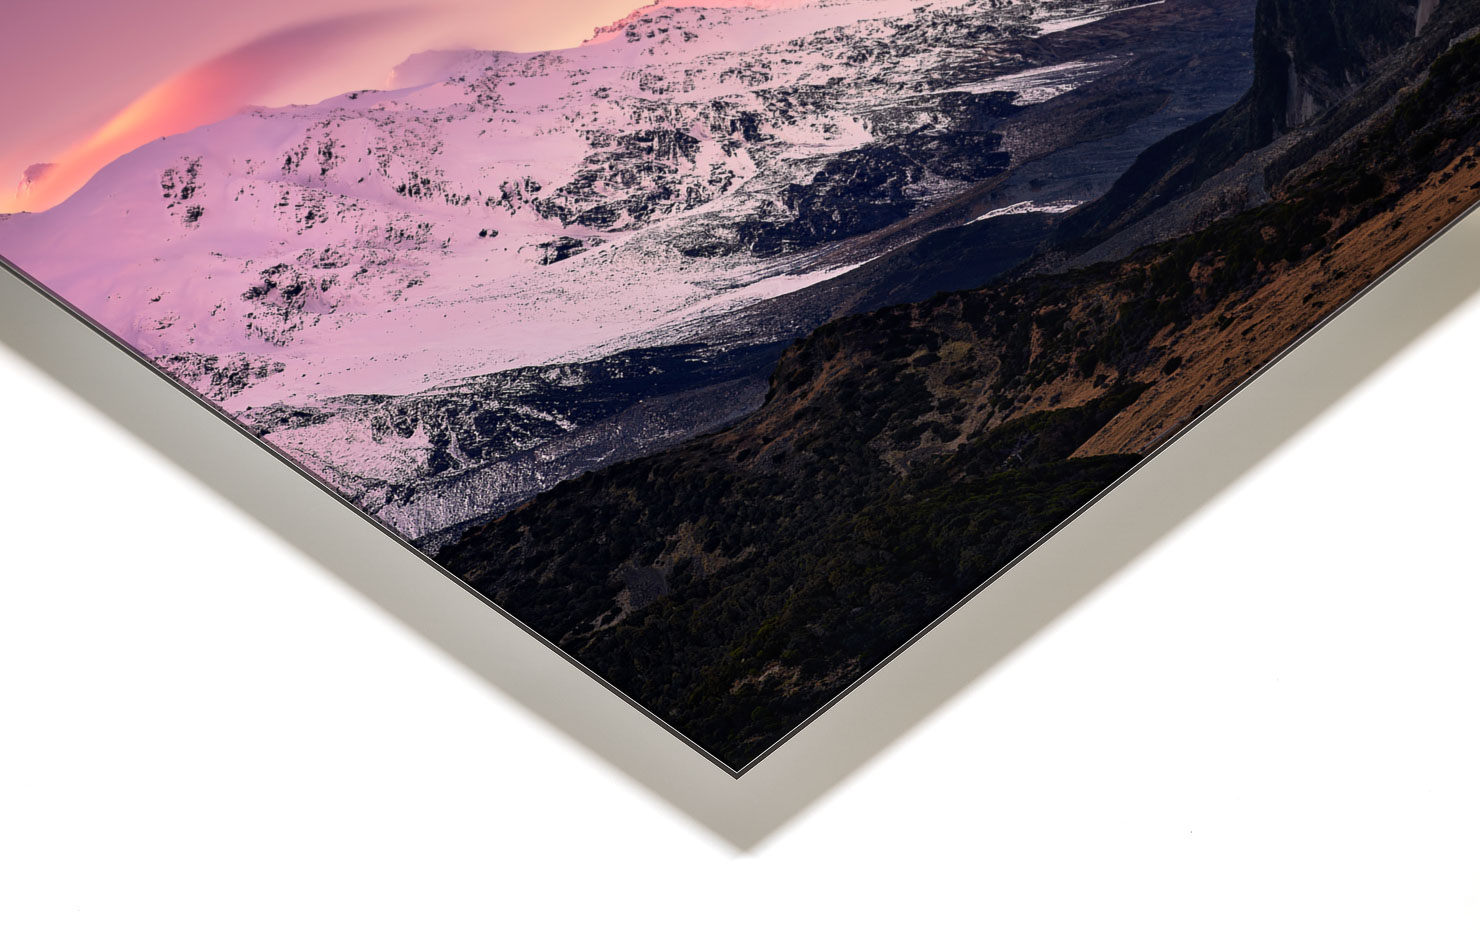 whisper Aoraki Mount Cook New Zealand buy limited edition photograph landscape Full Acrylic Aluminium Metal Frame Paul Reiffer